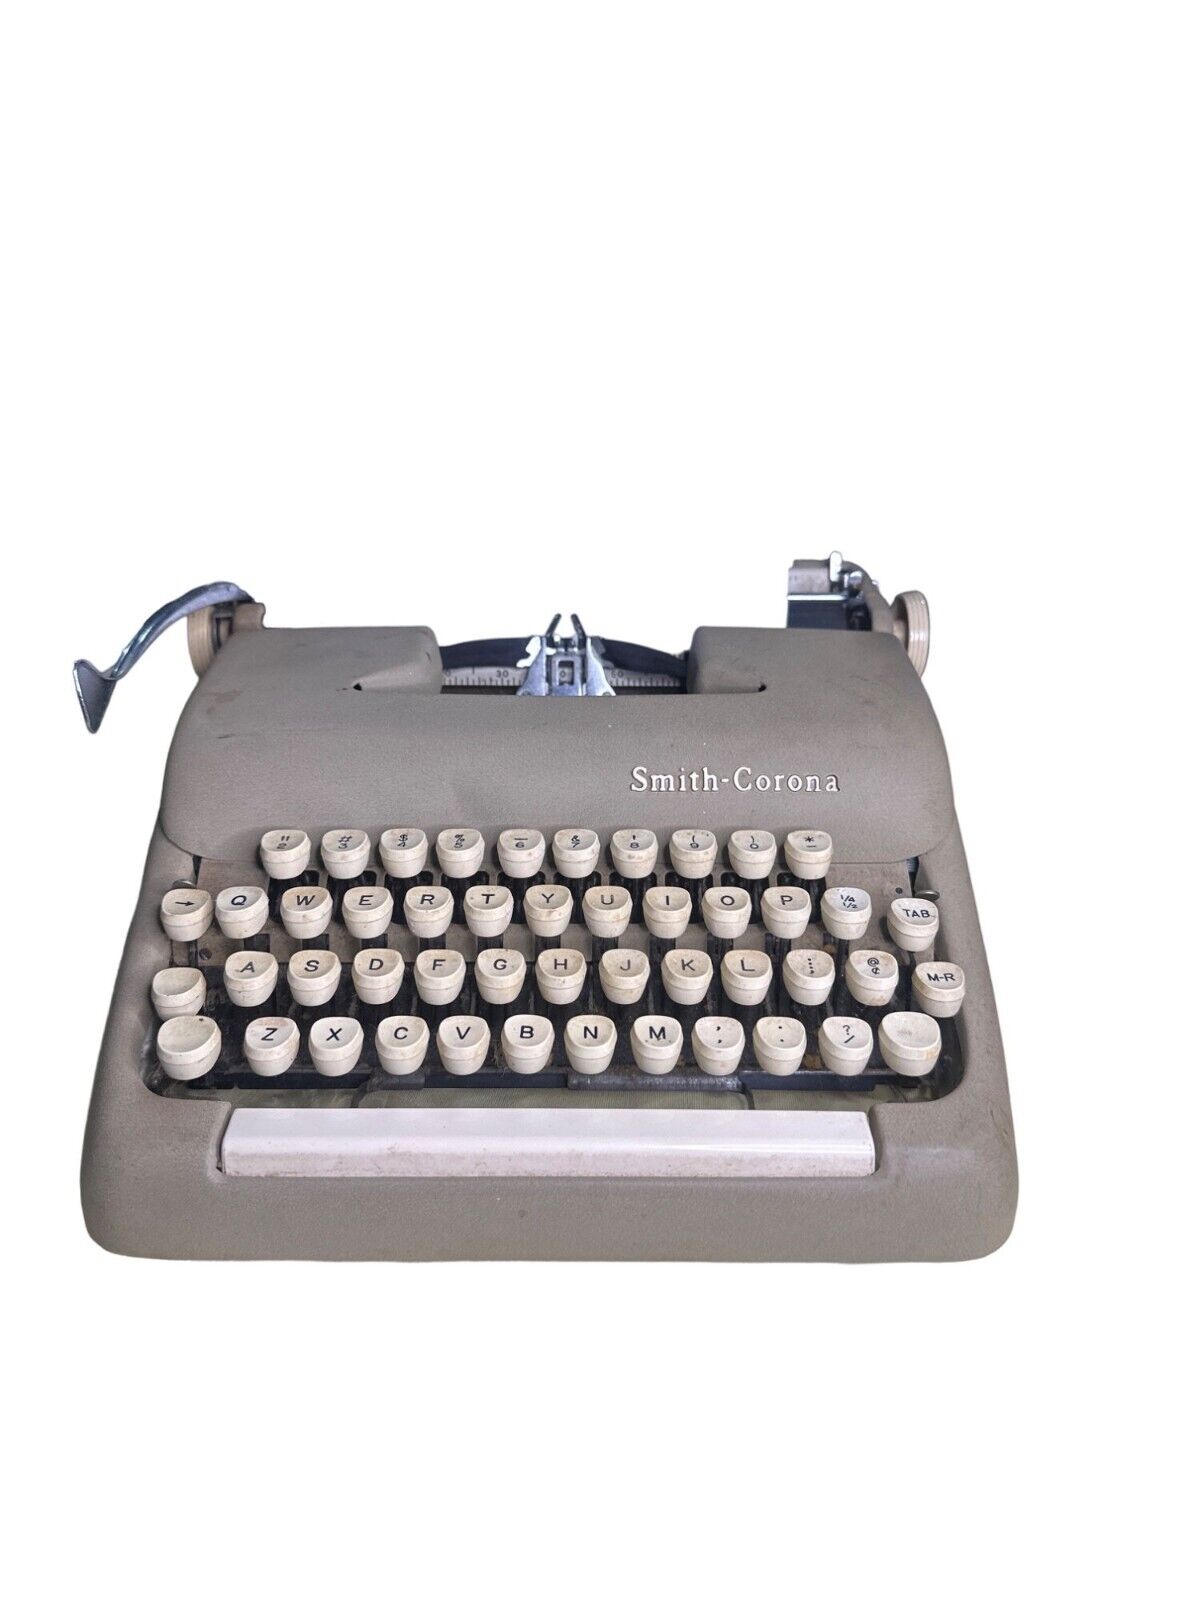 Smith-Corona Typewriter 1950s 